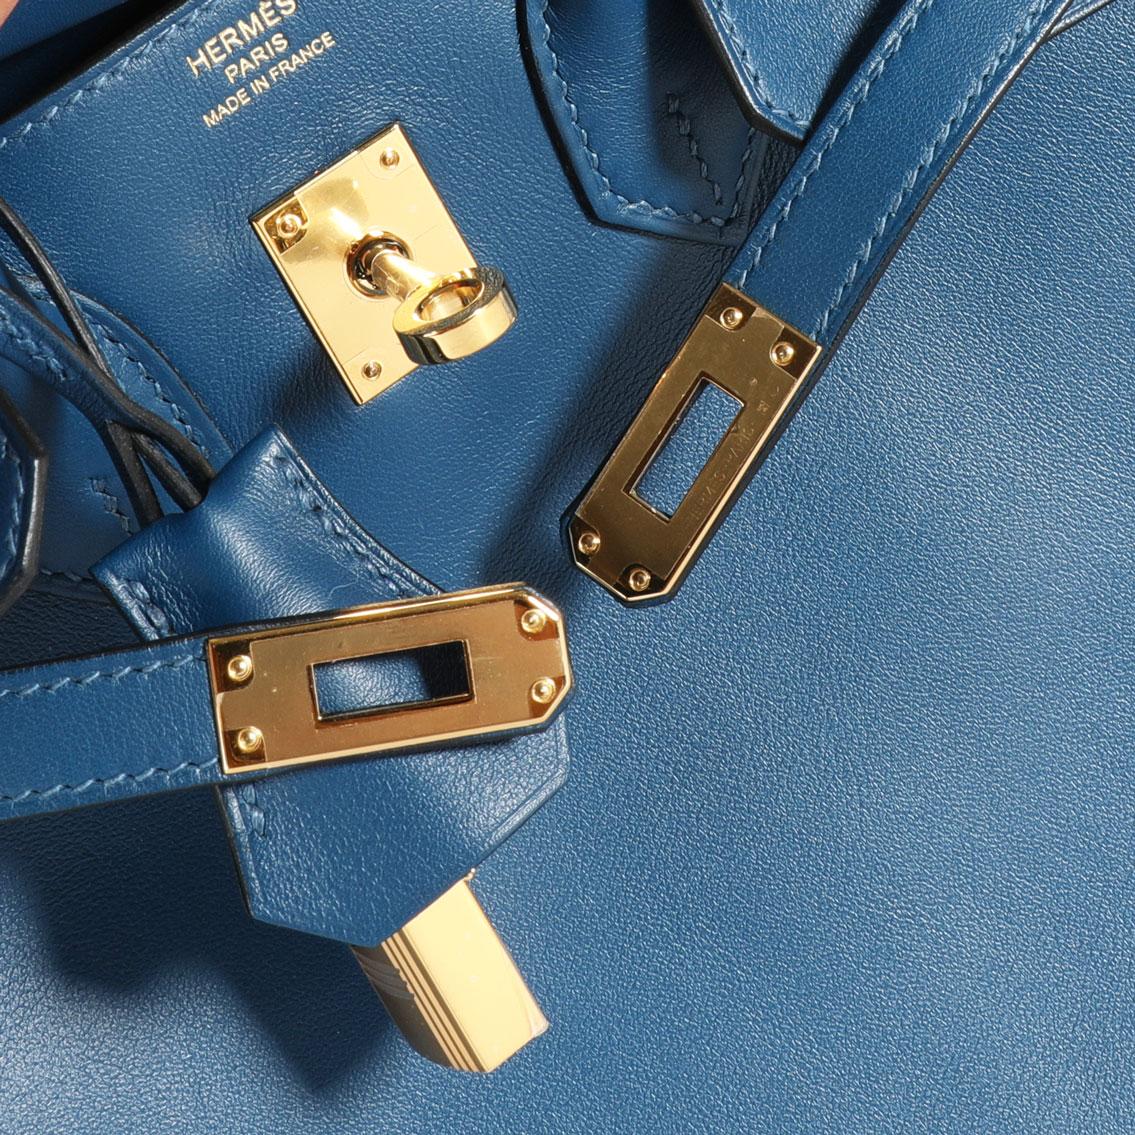 Hermès Deep Blue Swift Birkin 25 GHW
SKU: 112182
MSRP:  
Condition: Pre-owned (3000)
Condition Description: 
Handbag Condition: Very Good
Condition Comments: Very Good Condition. Plastic on most hardware. Faint scuff marks to exterior.
Brand: